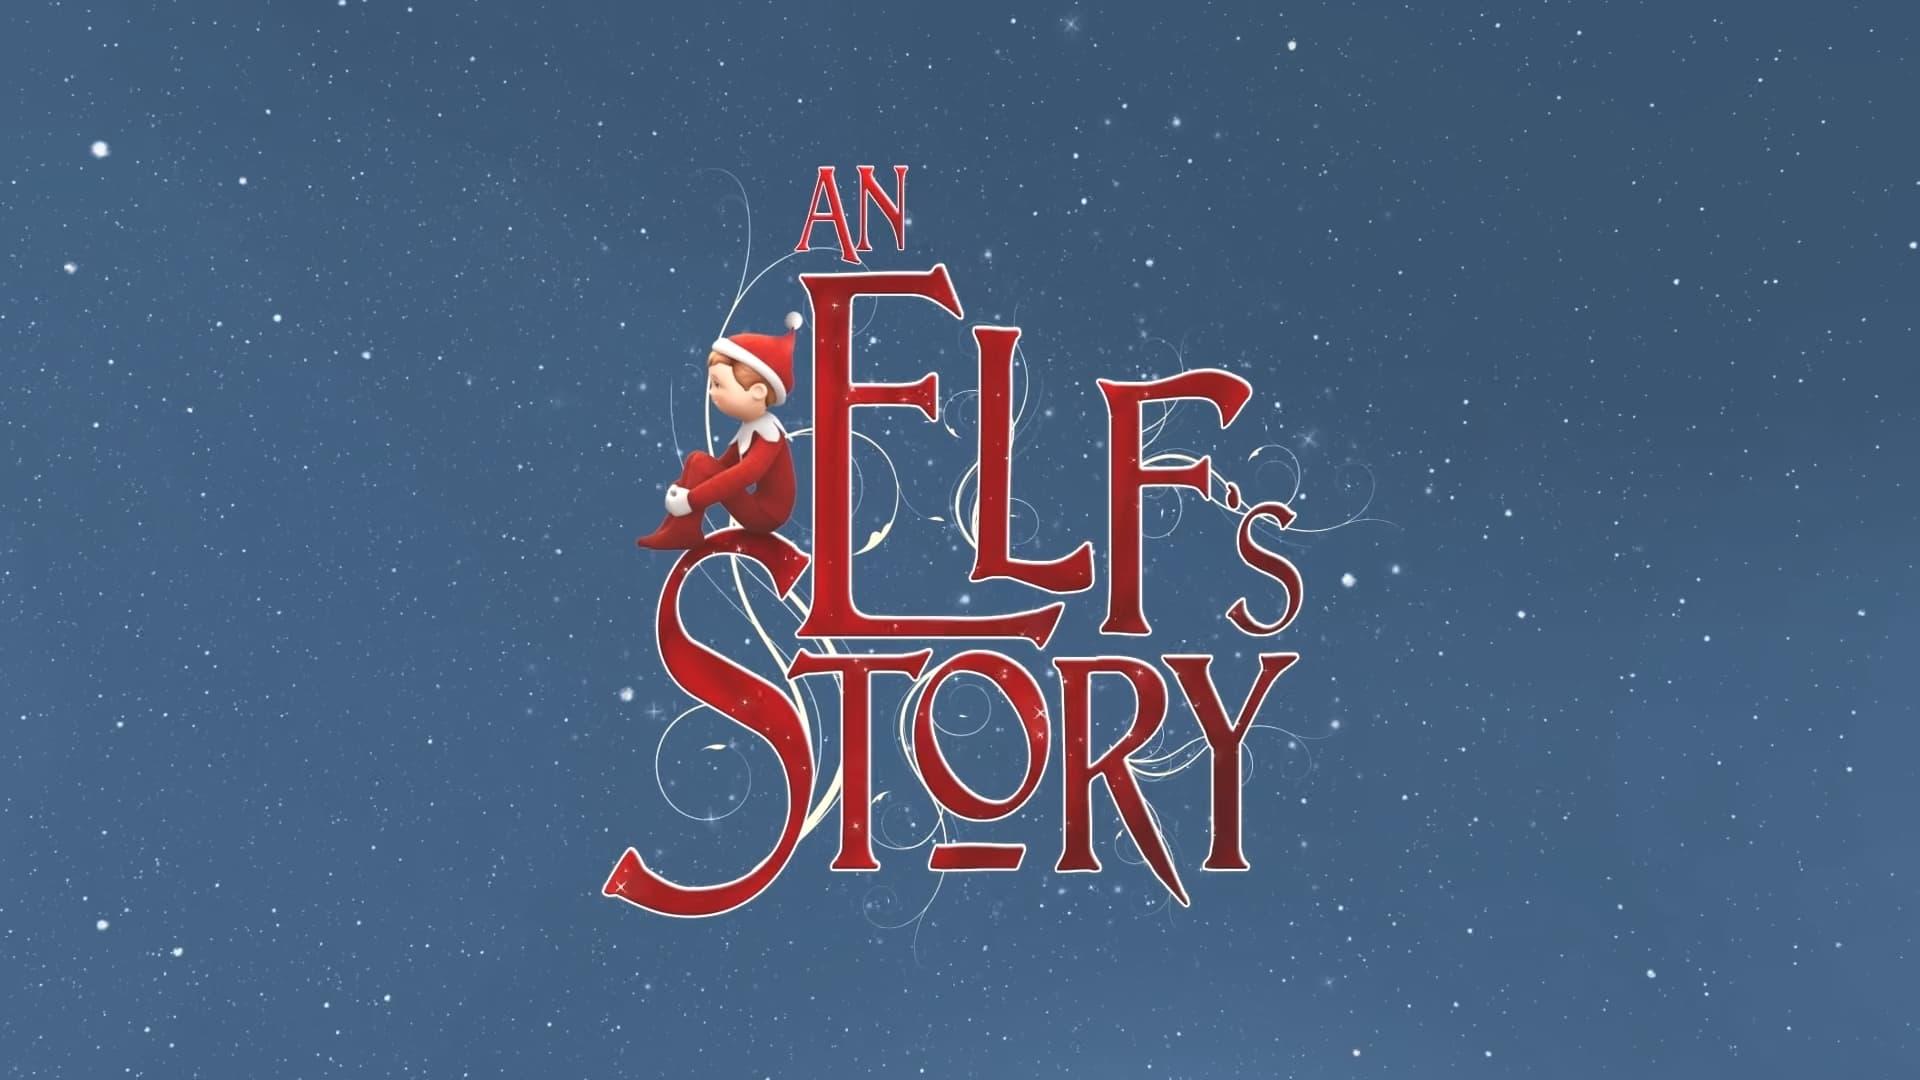 An Elf's Story backdrop